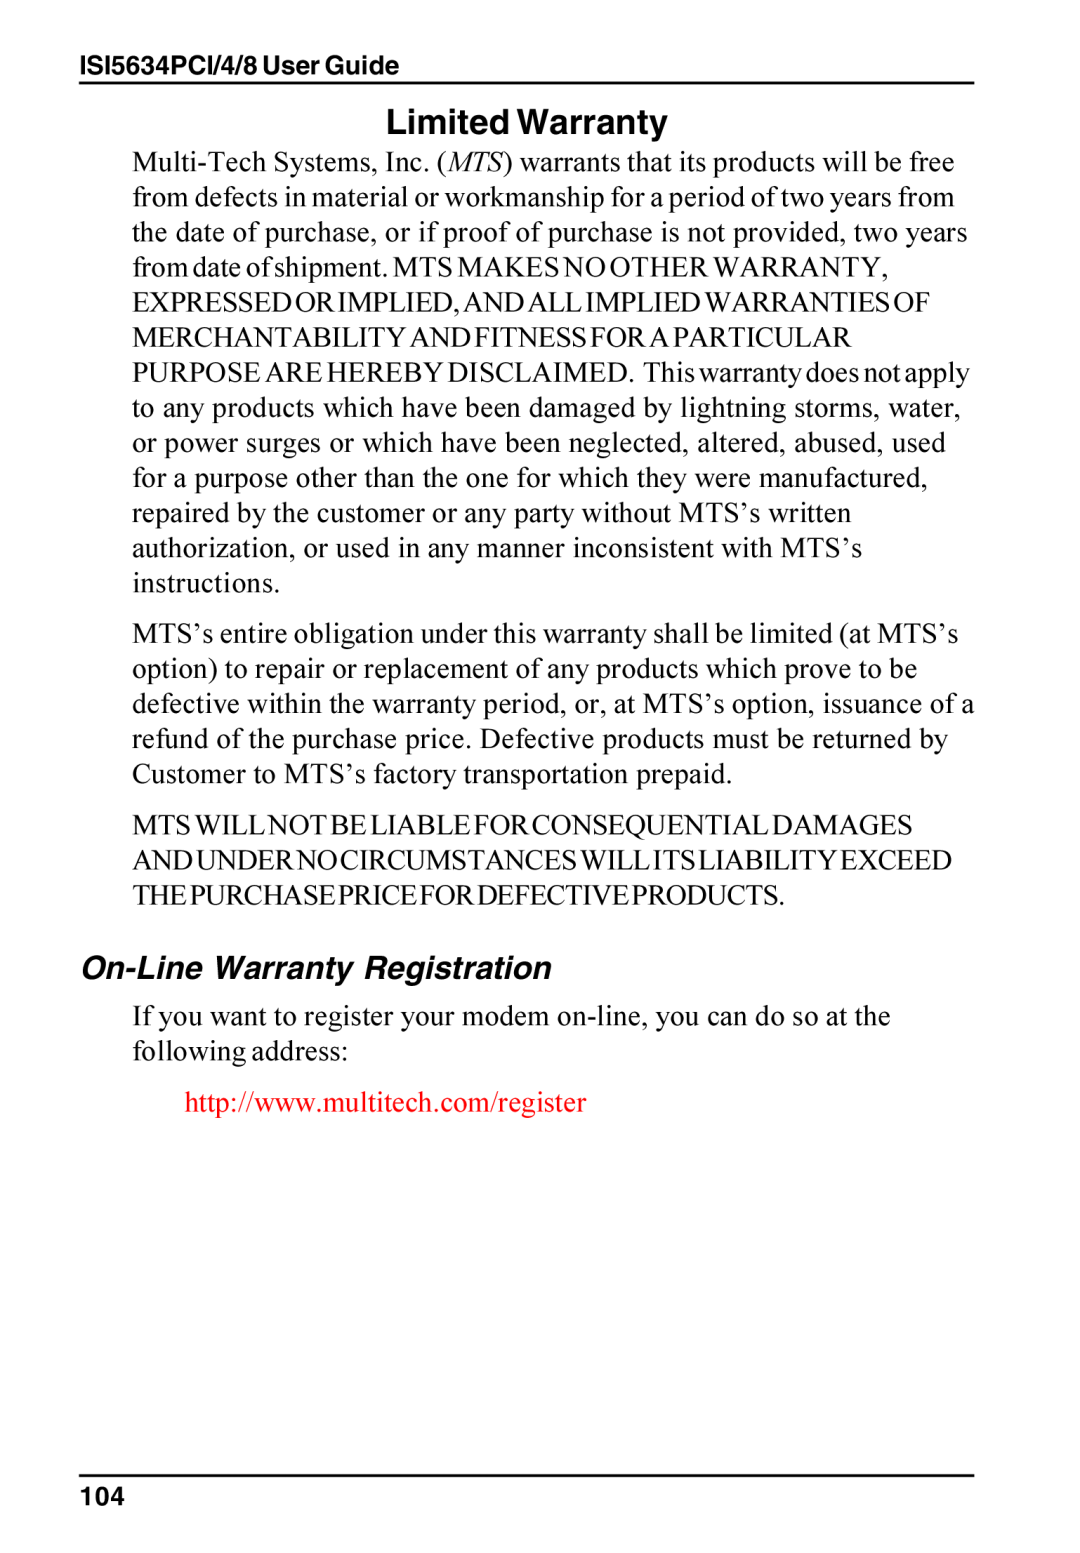 Multi-Tech Systems ISI5634PCI/4/8 manual Limited Warranty, On-Line Warranty Registration 